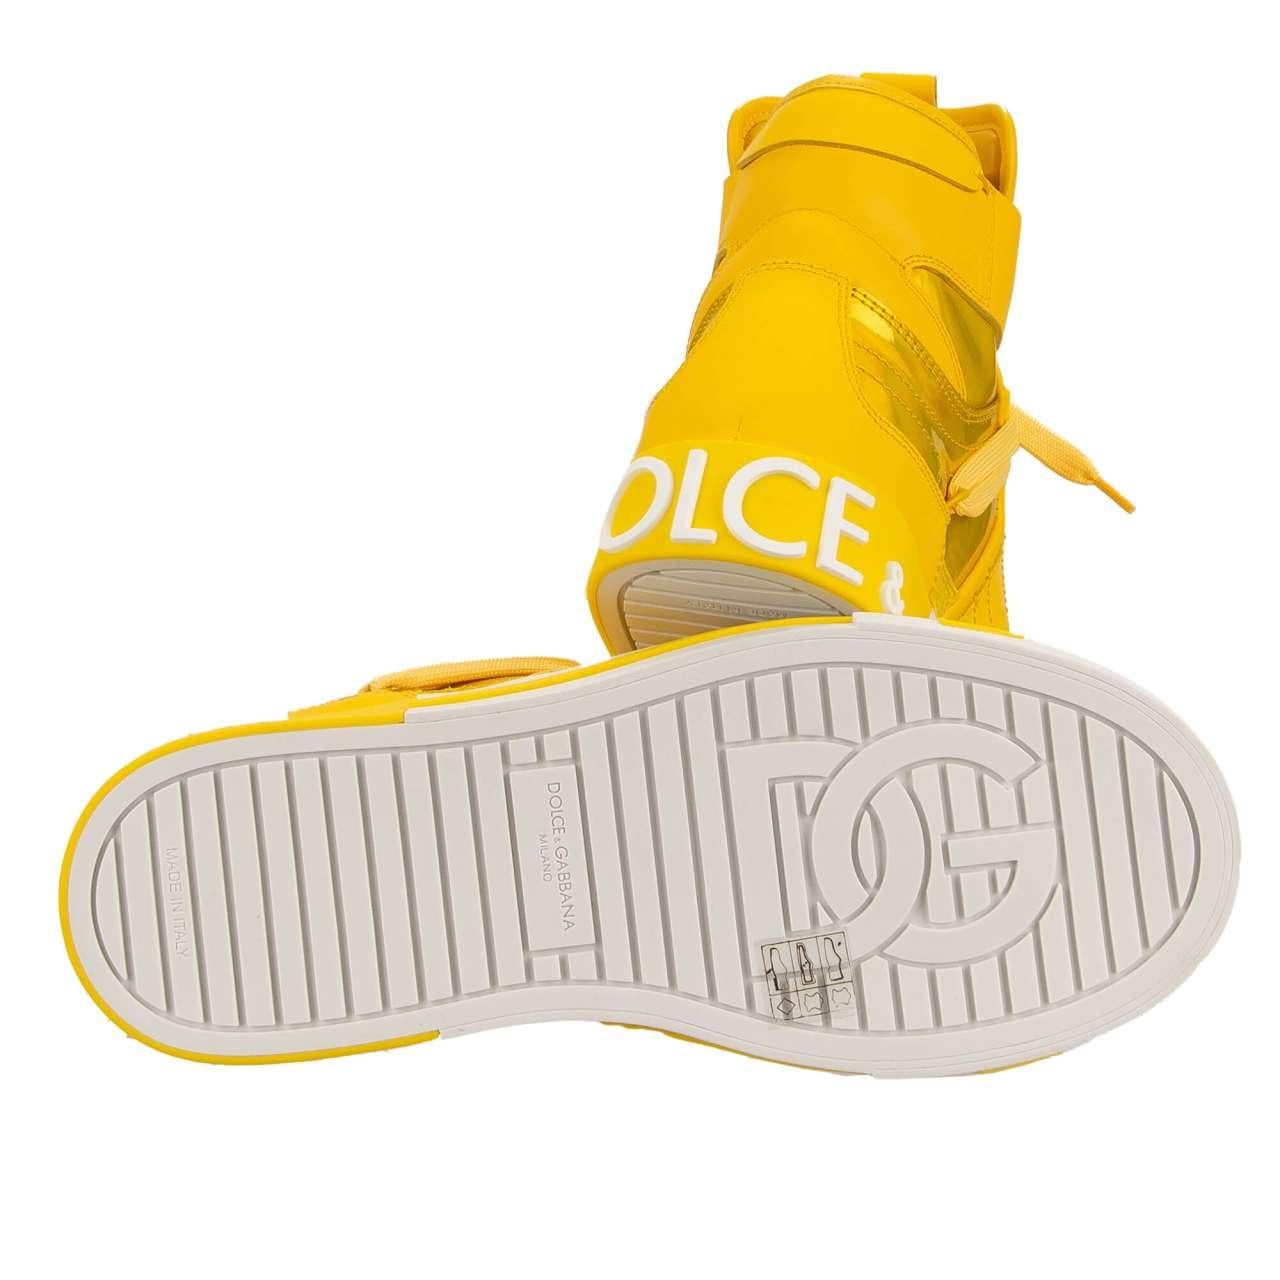 Dolce & Gabbana - DG Logo High Top Sneaker DONNA Rainbow Yellow EUR 36 For Sale 4